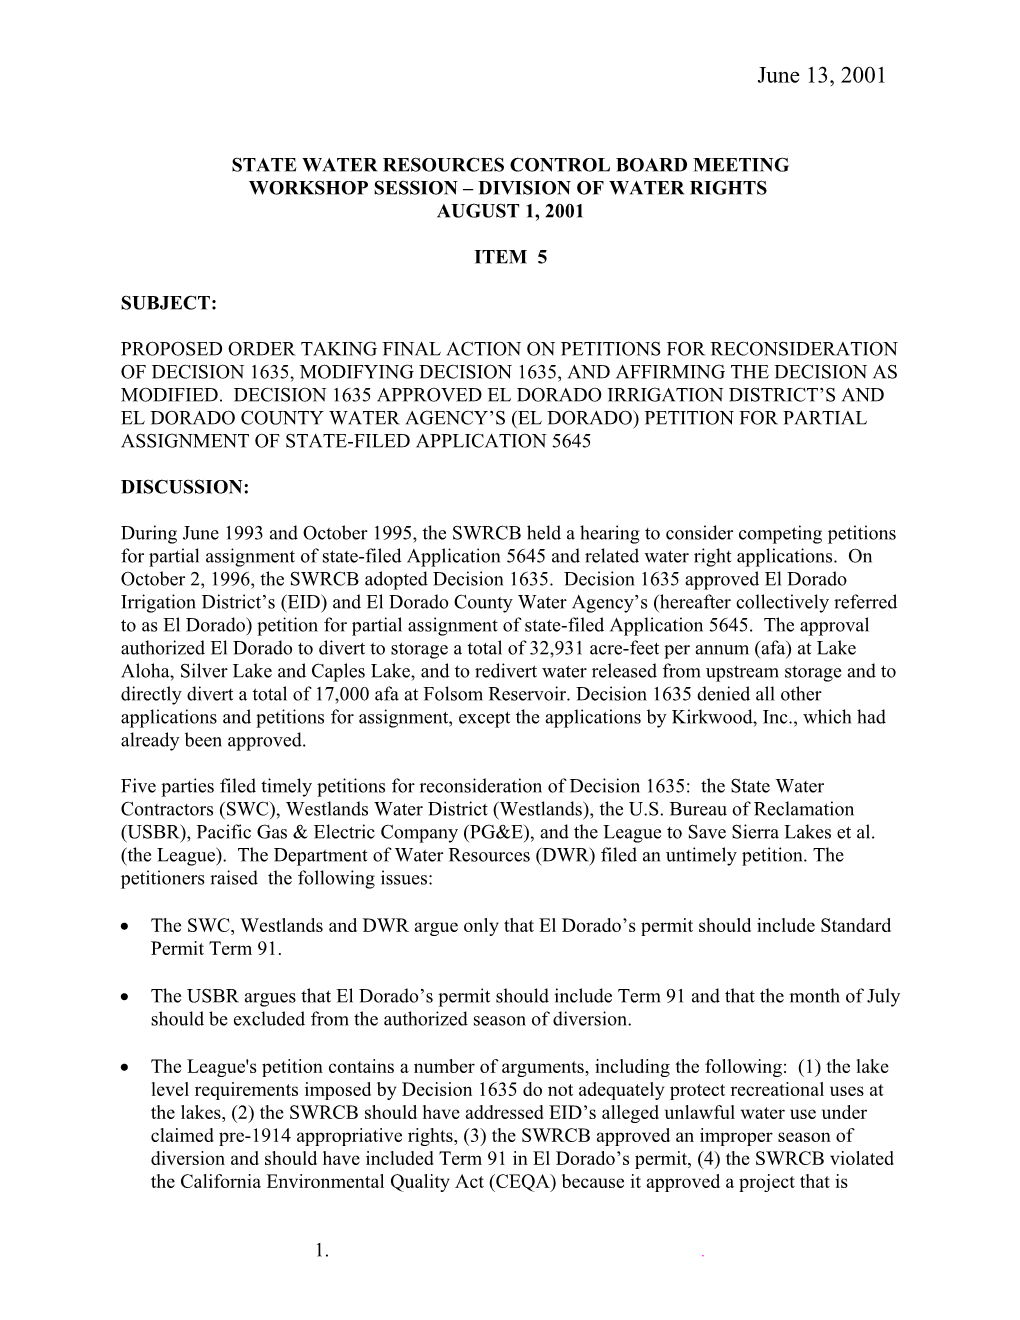 El Dorado Irrigation District Petition for Reconsideration/ Decision 1635